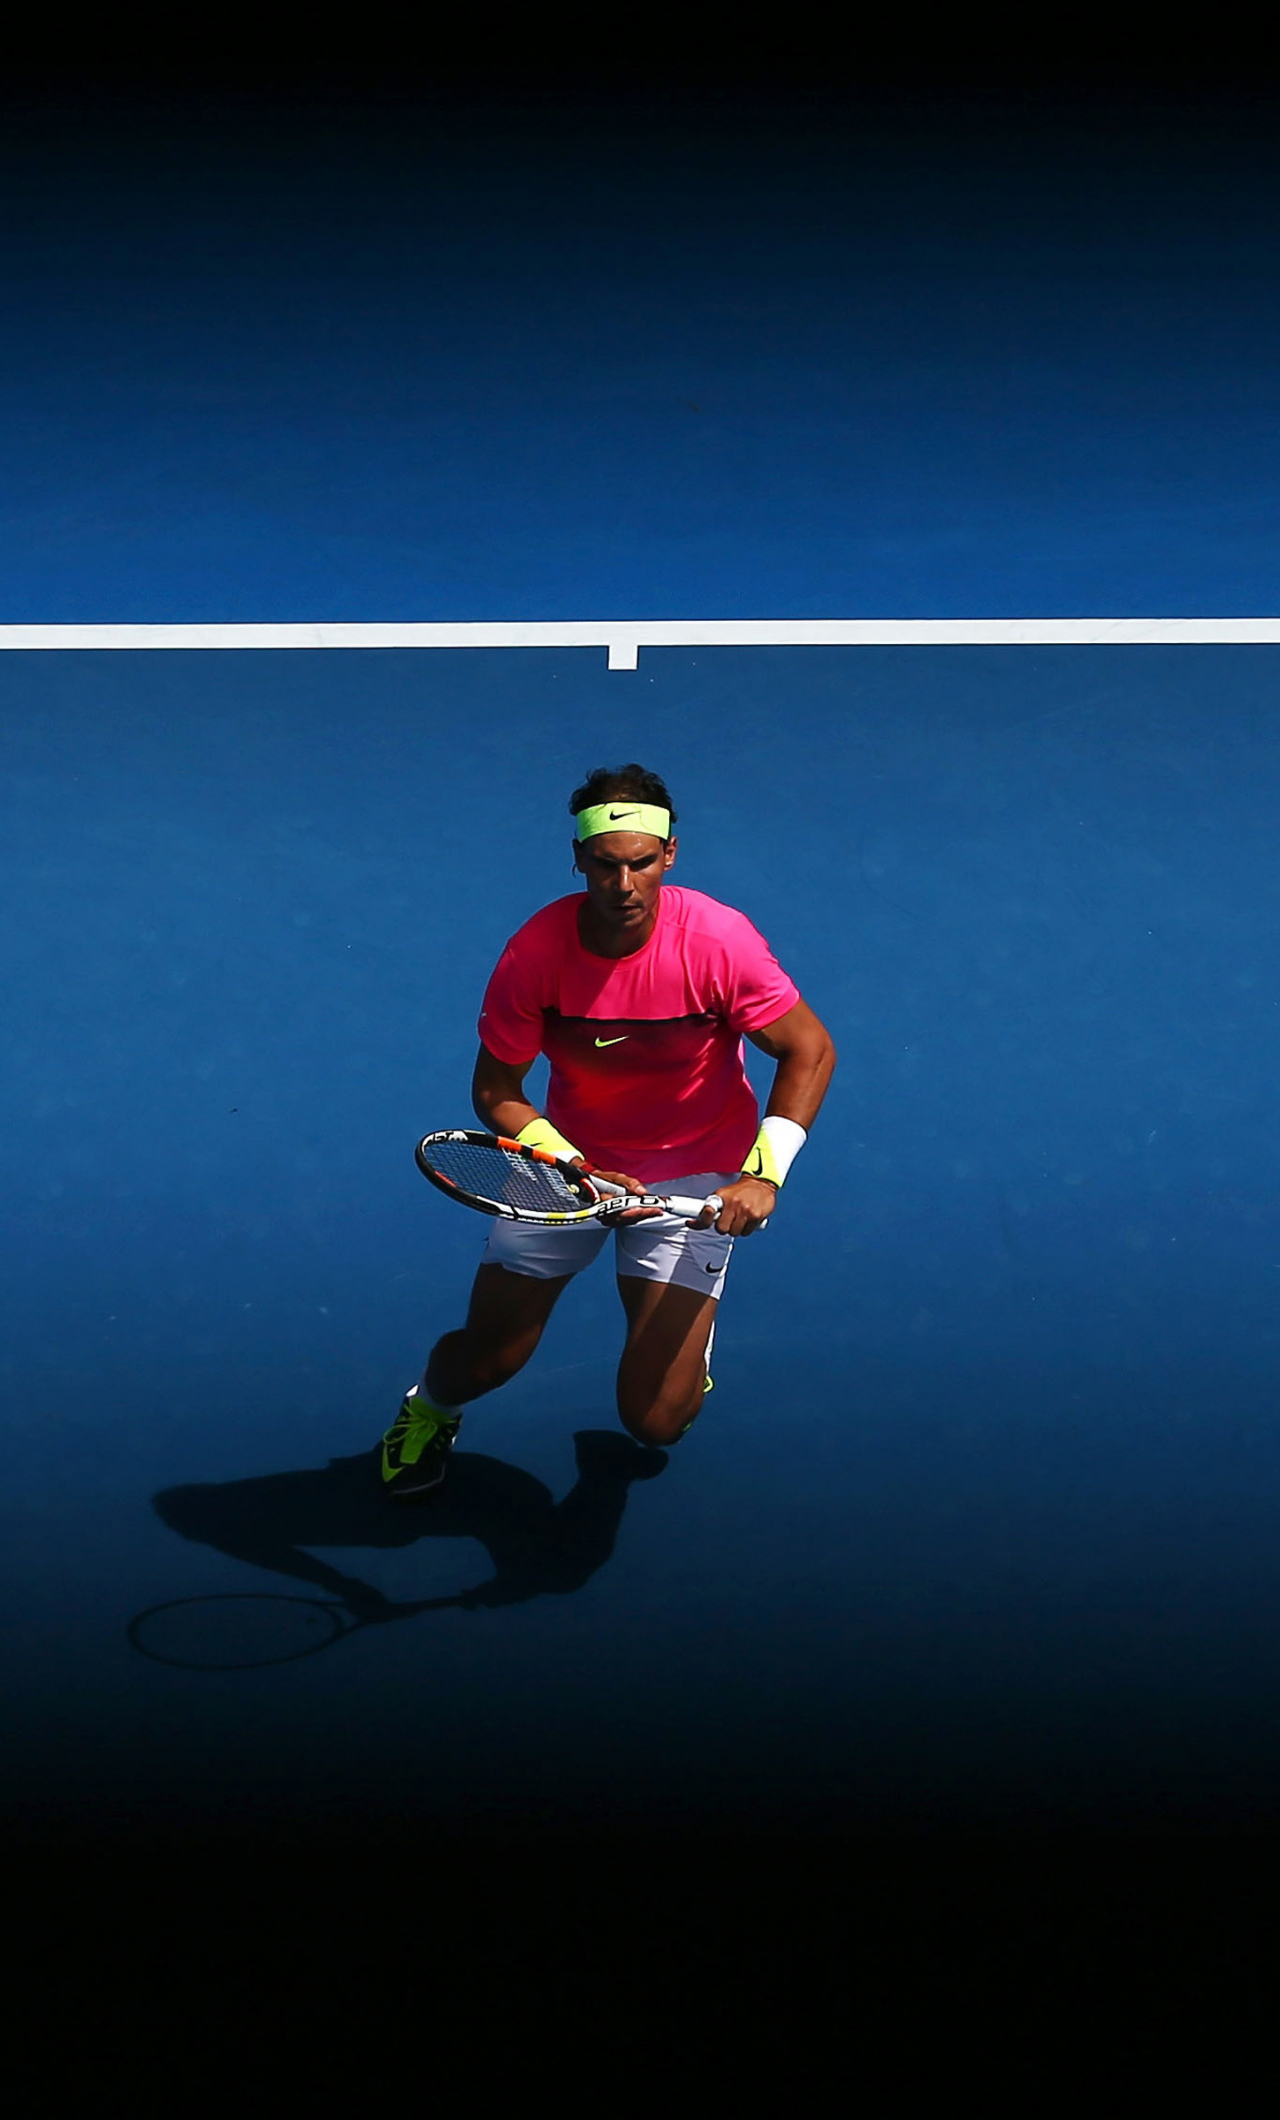 Download 1280x21 Wallpaper Sports Tennis Player Celebrity Rafael Nadal Iphone 6 Plus 1280x21 Hd Image Background